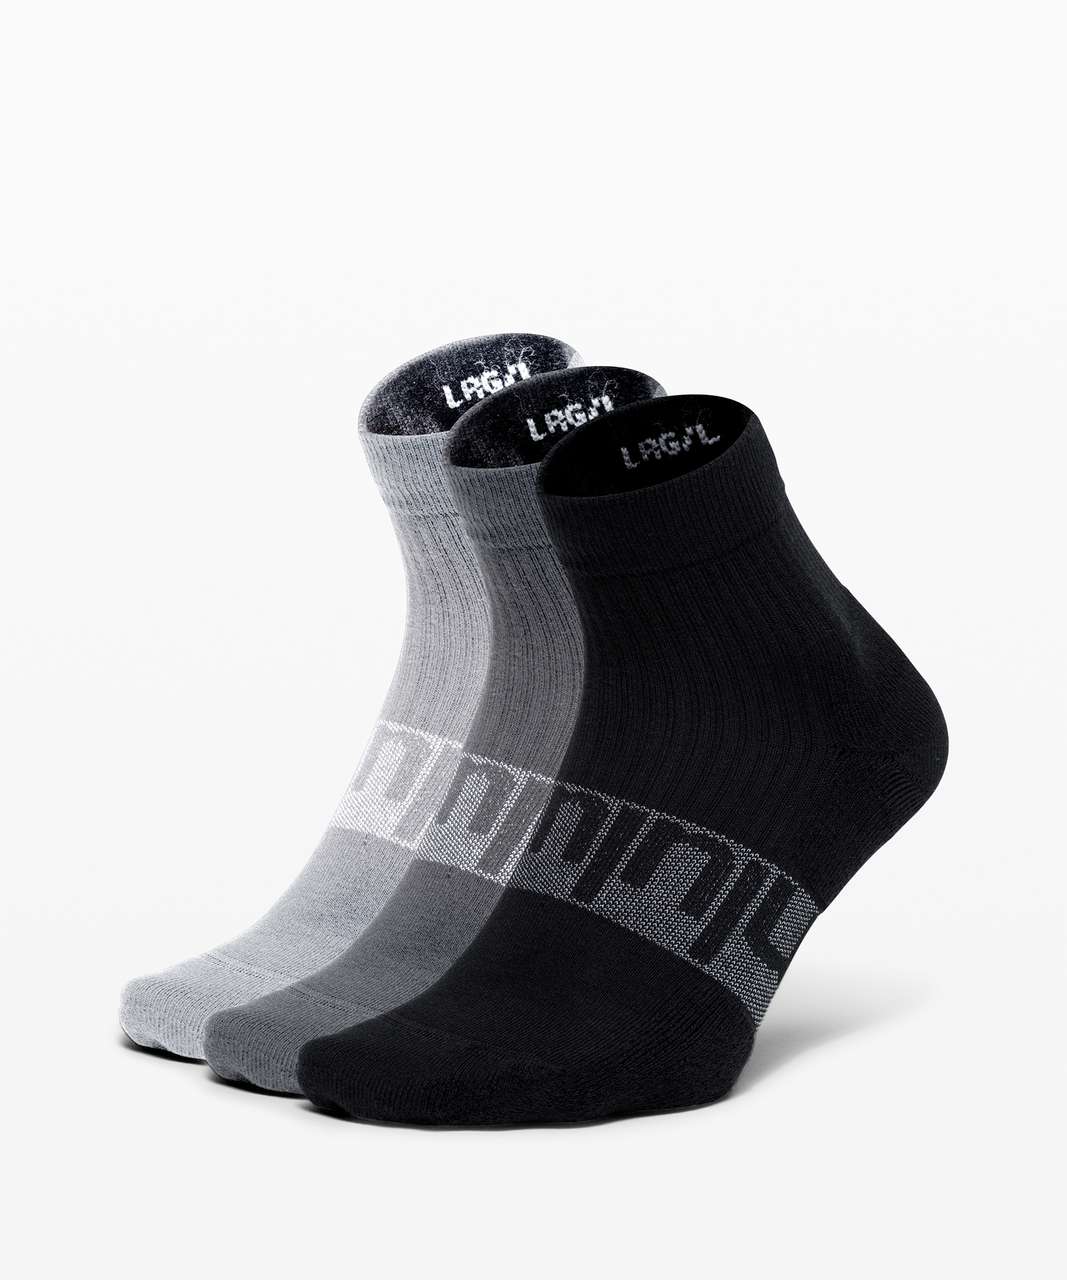 Lululemon Daily Stride Mid Crew Sock *3 Pack - White / Heather Grey / Black